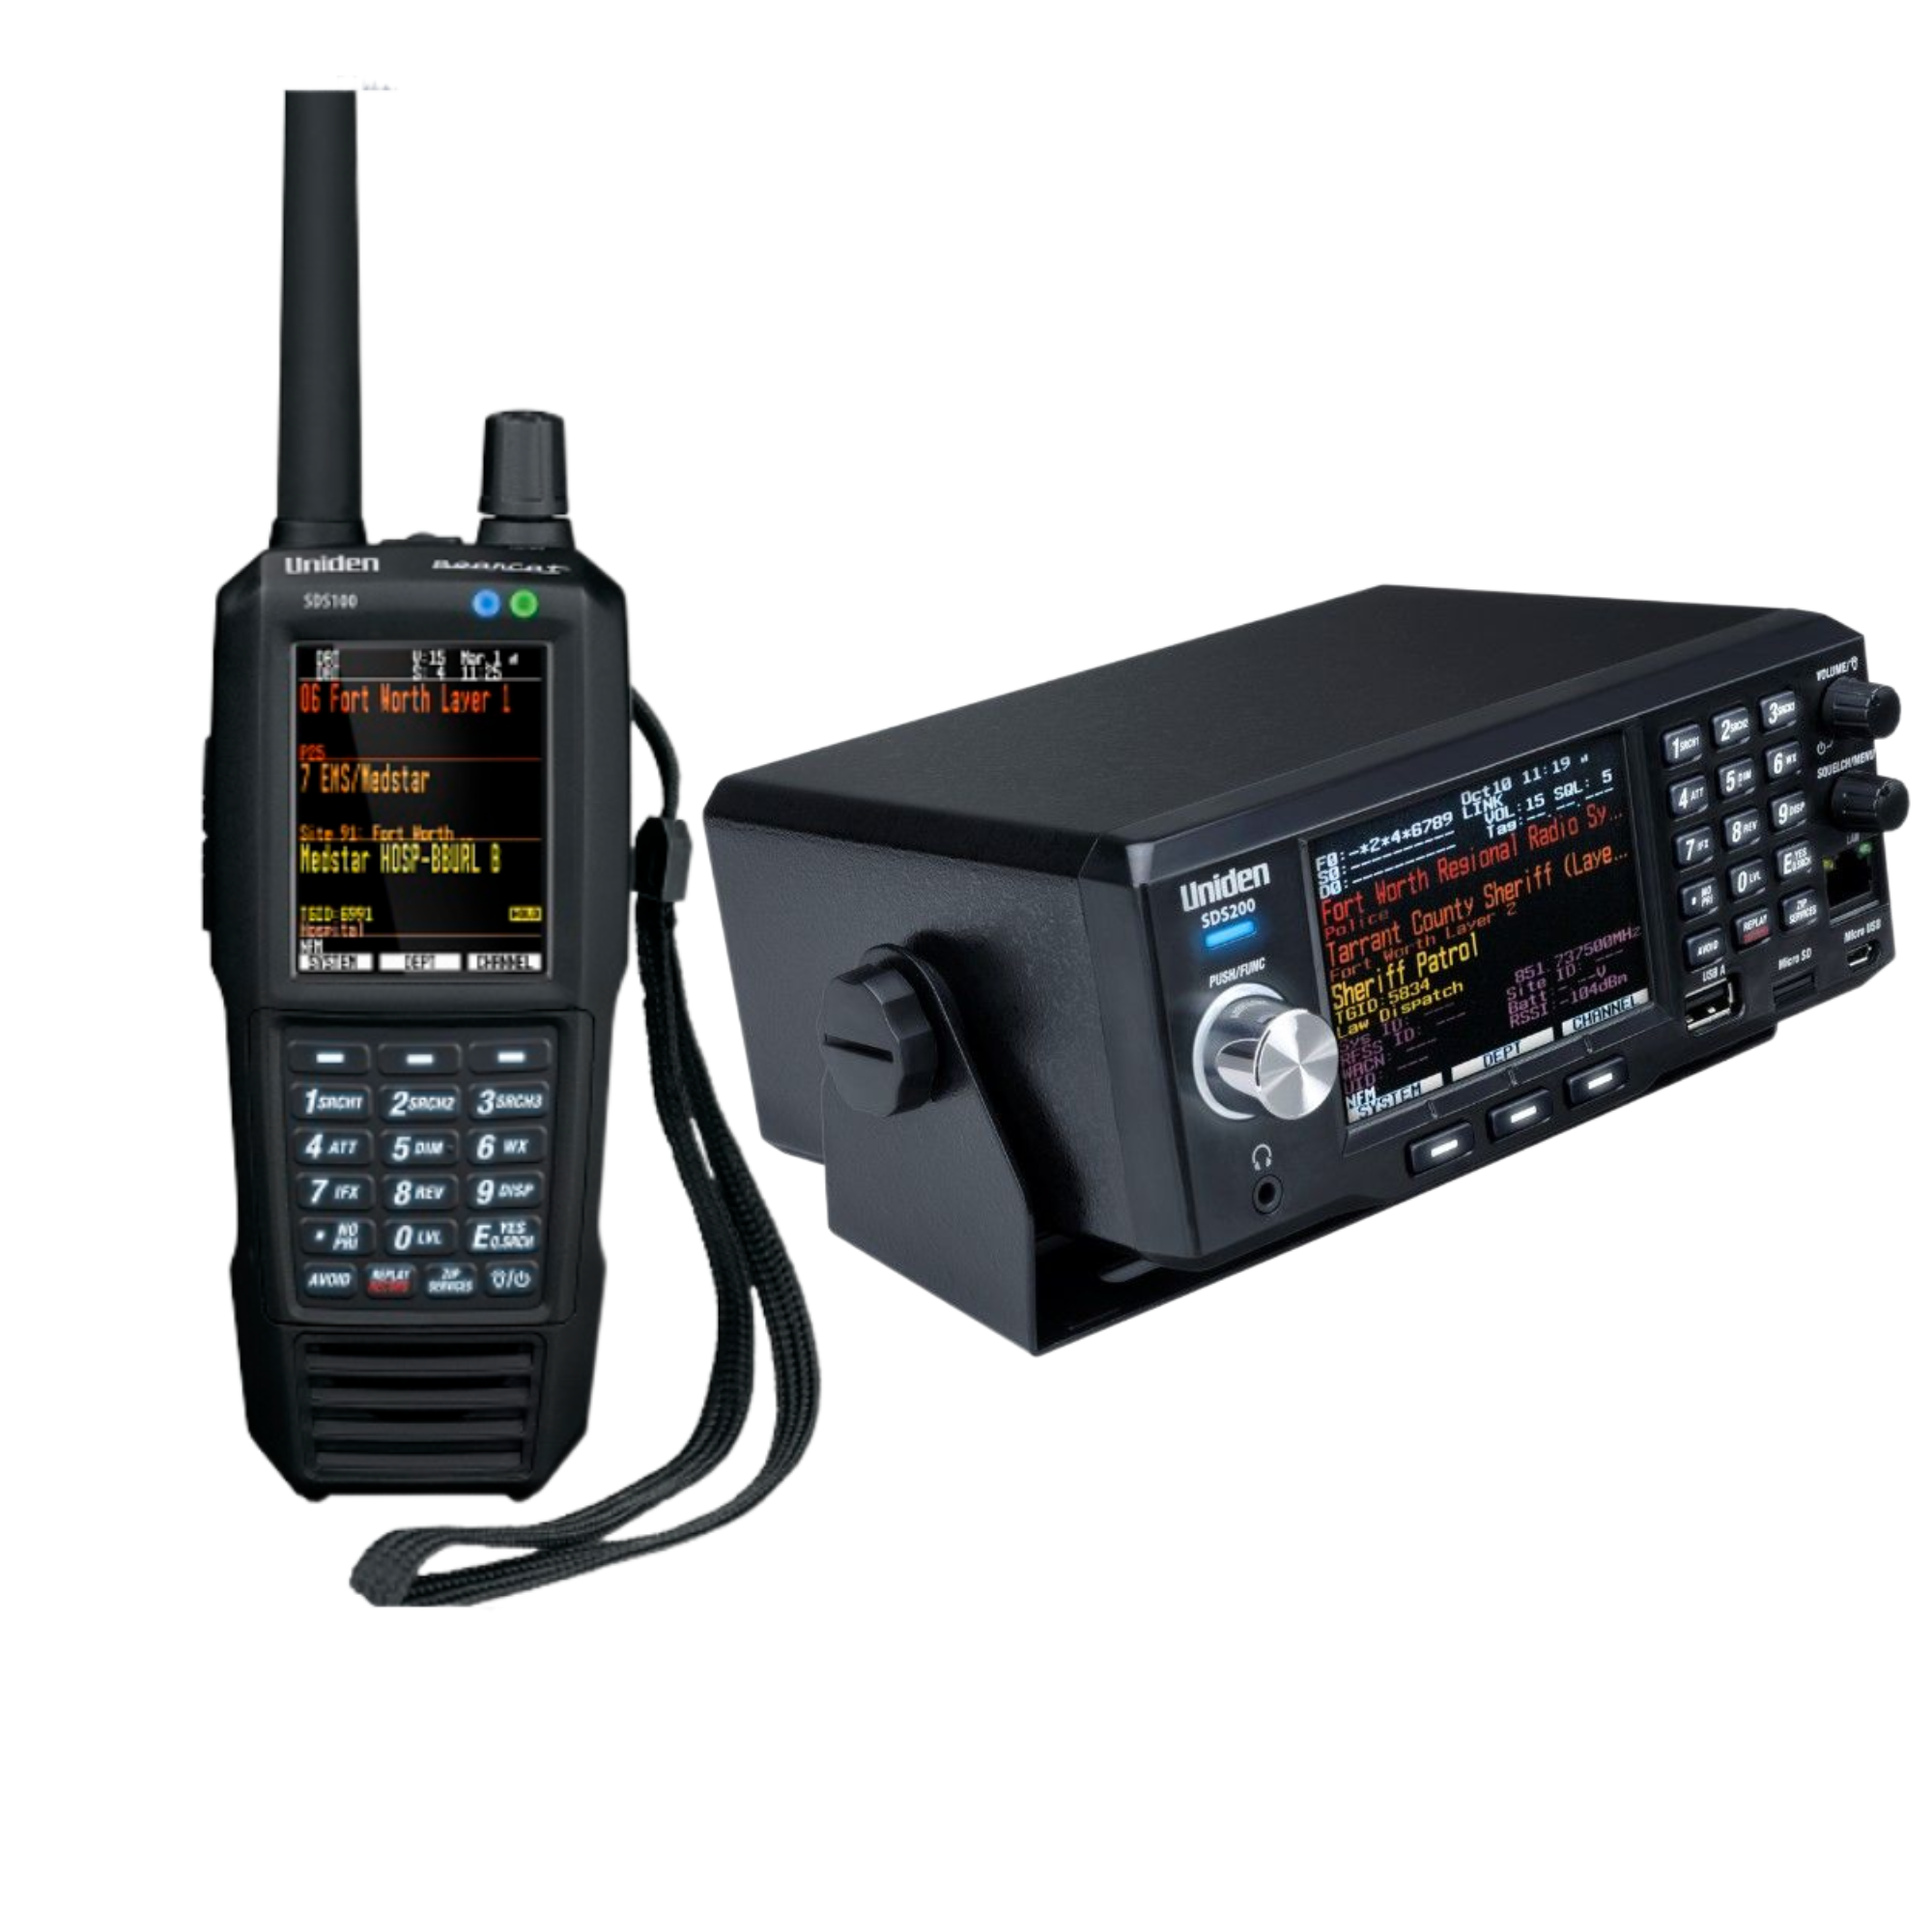 Shop the full line of Uniden Bearcat Police Scanner Radios.